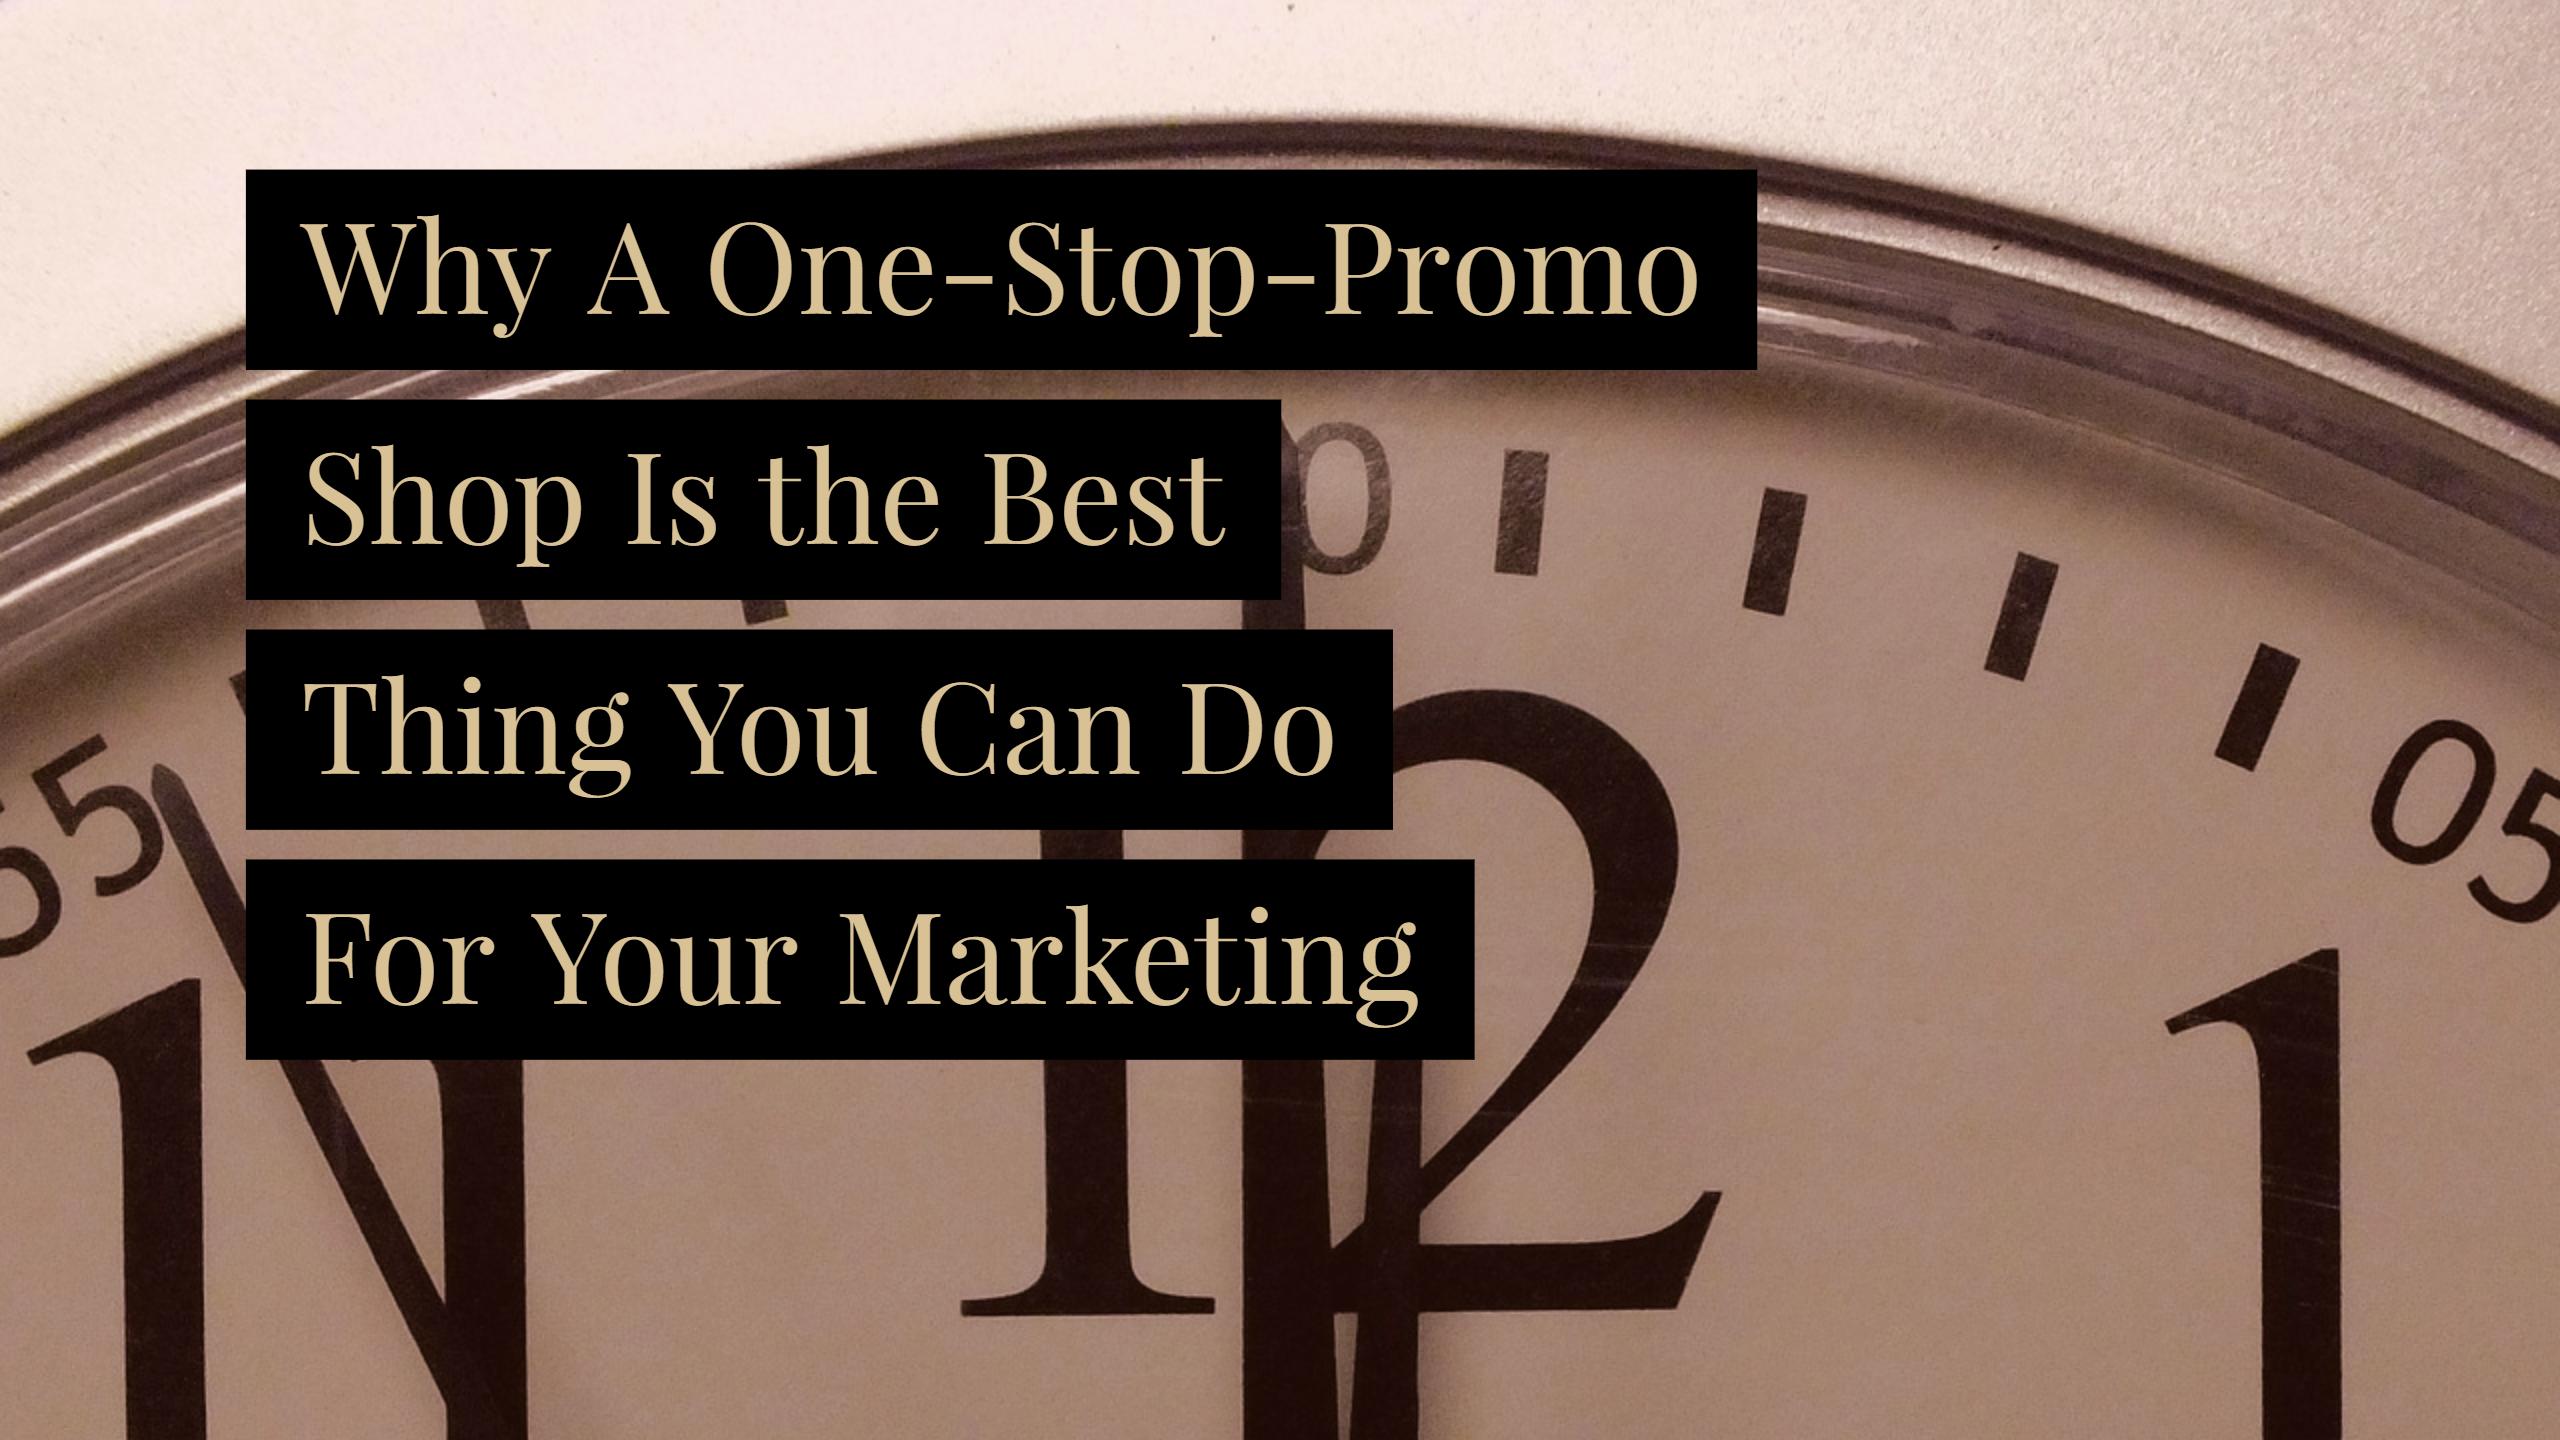 Do you have a promotional marketing vendor partner?